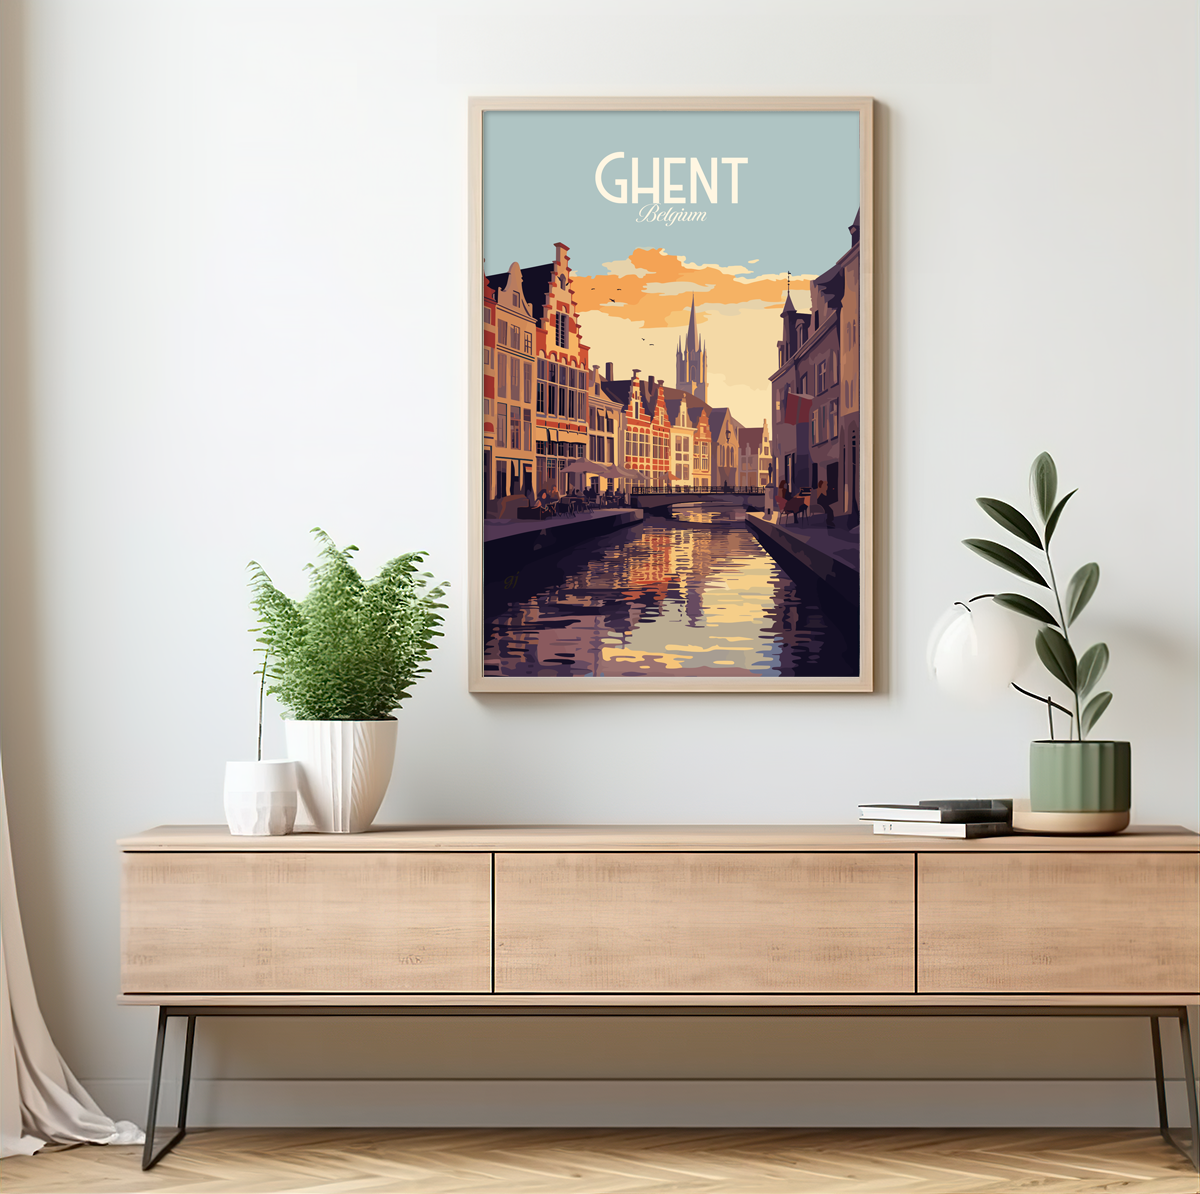 Ghent poster by bon voyage design